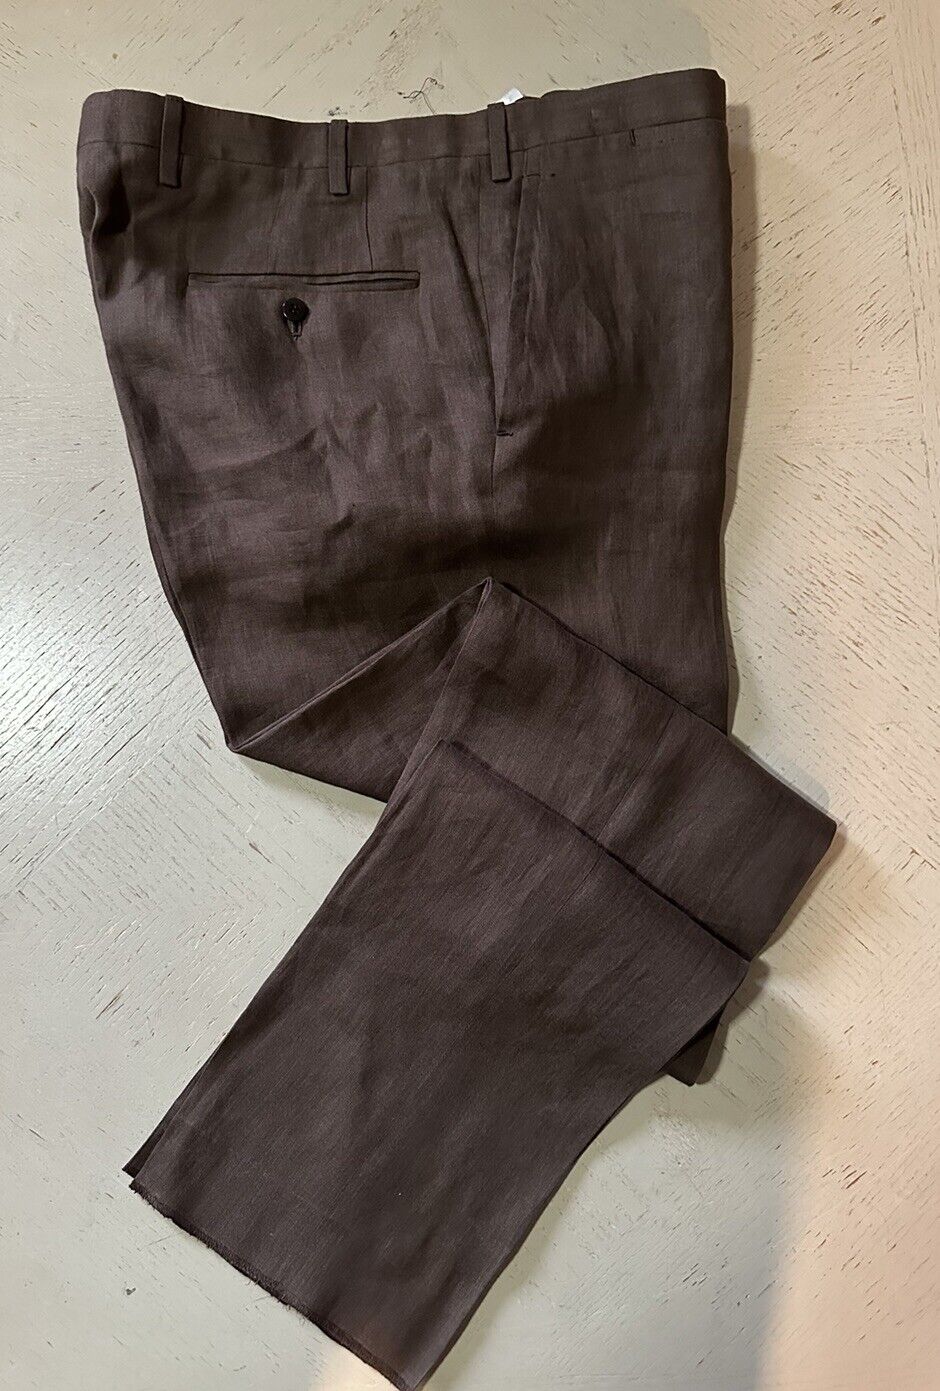 NWT $1395 Kiton Men’s High Waist Linen Pants Brown 34 US/50 Eu Italy